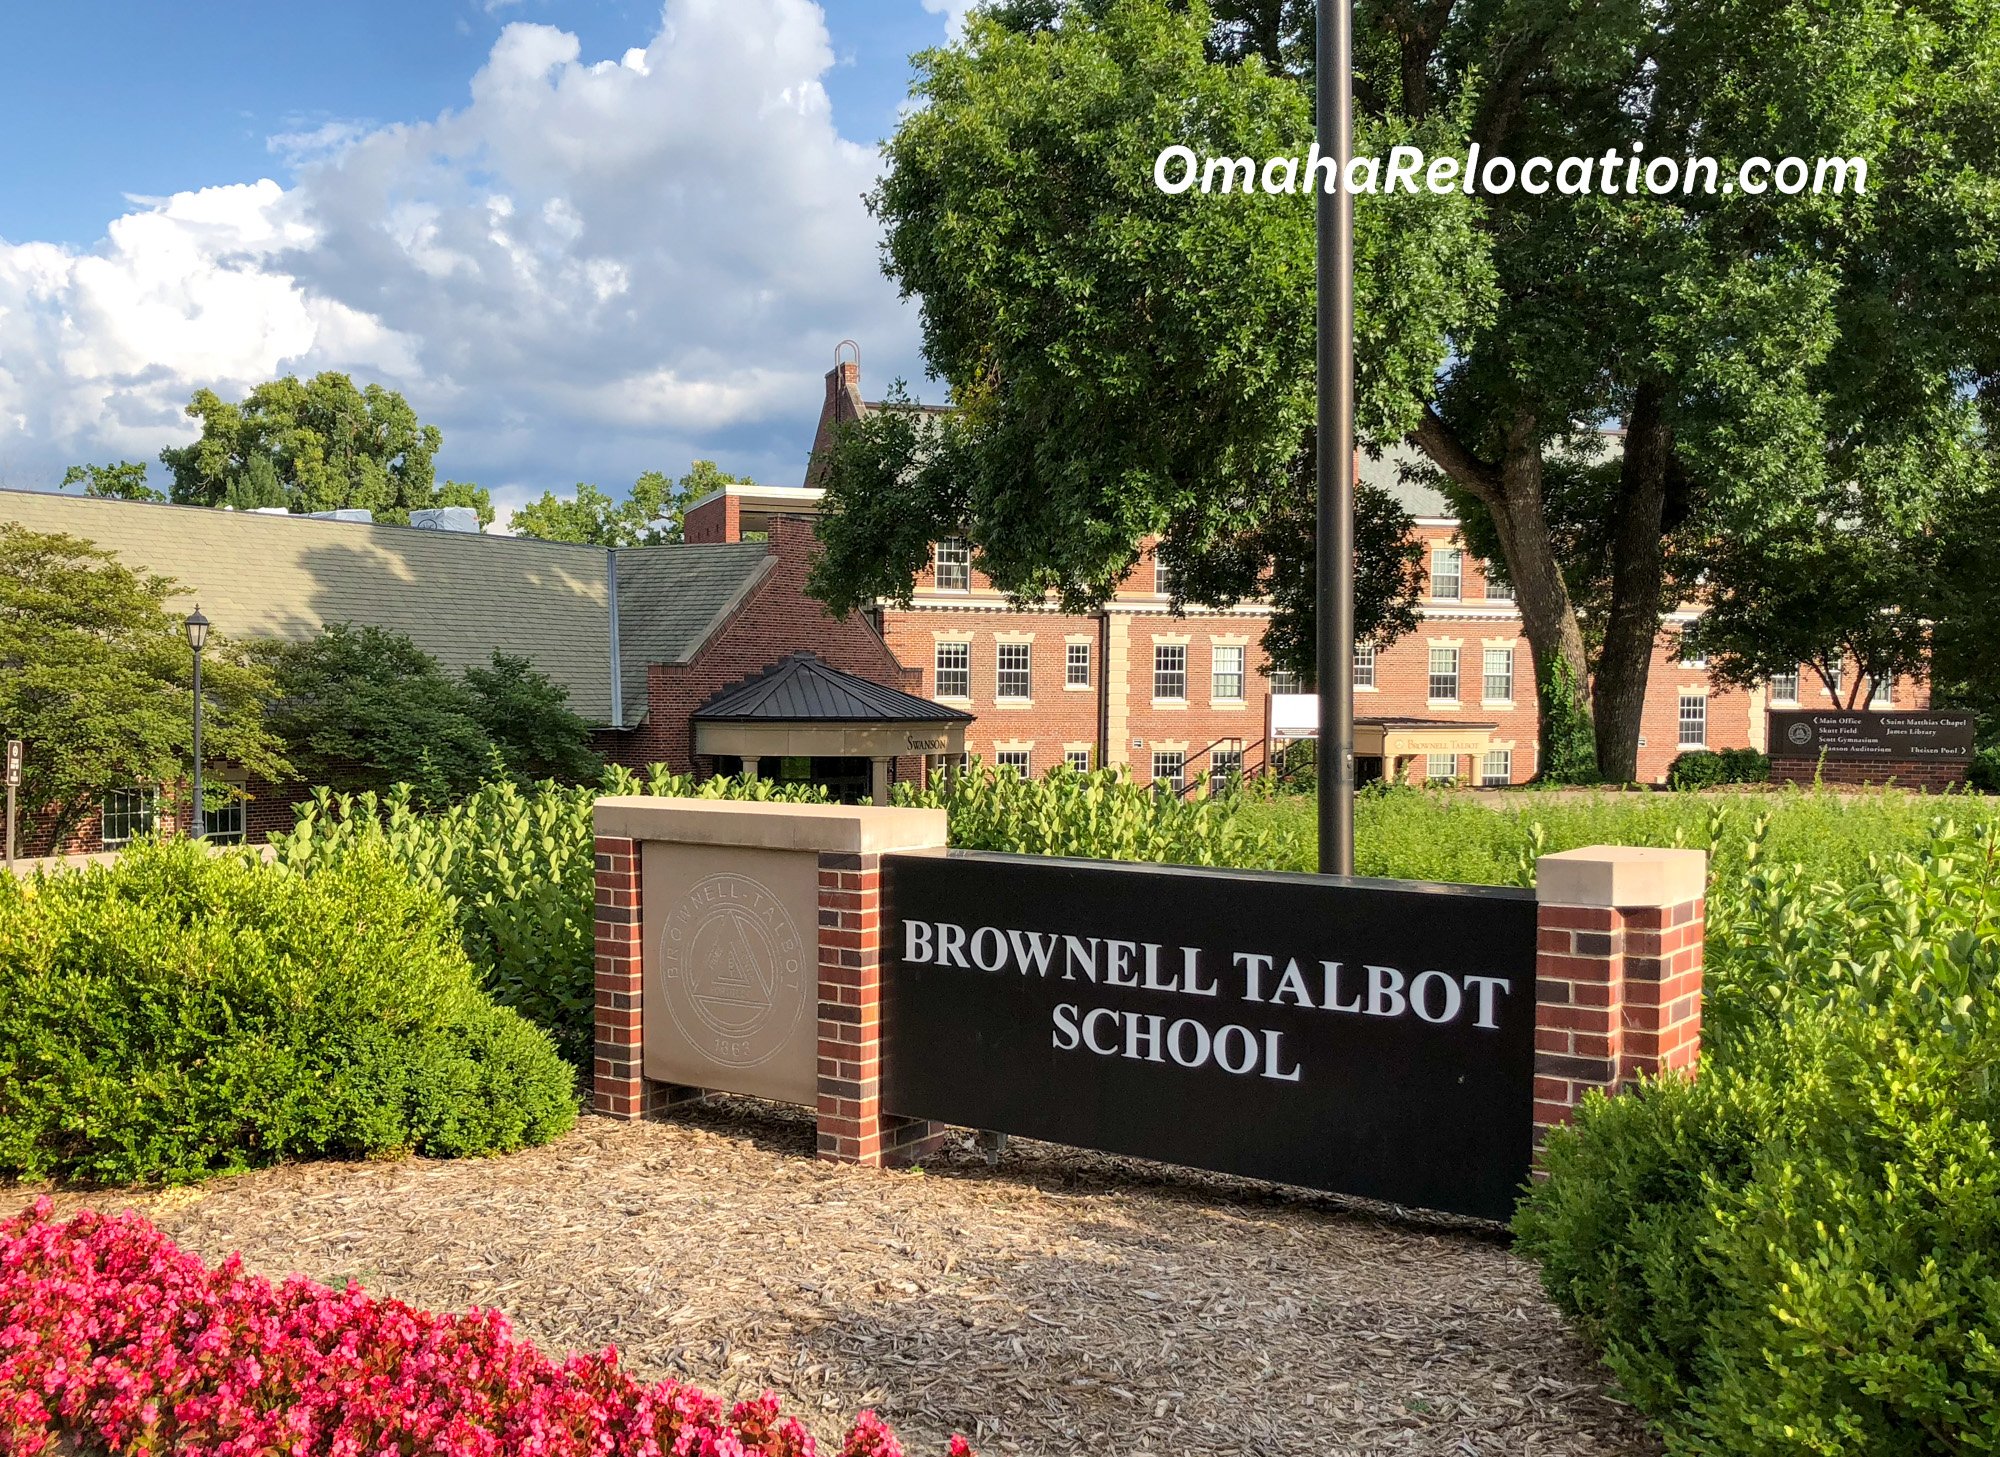 Entrance Sign to Brownell Talbot School in Omaha, Nebraska